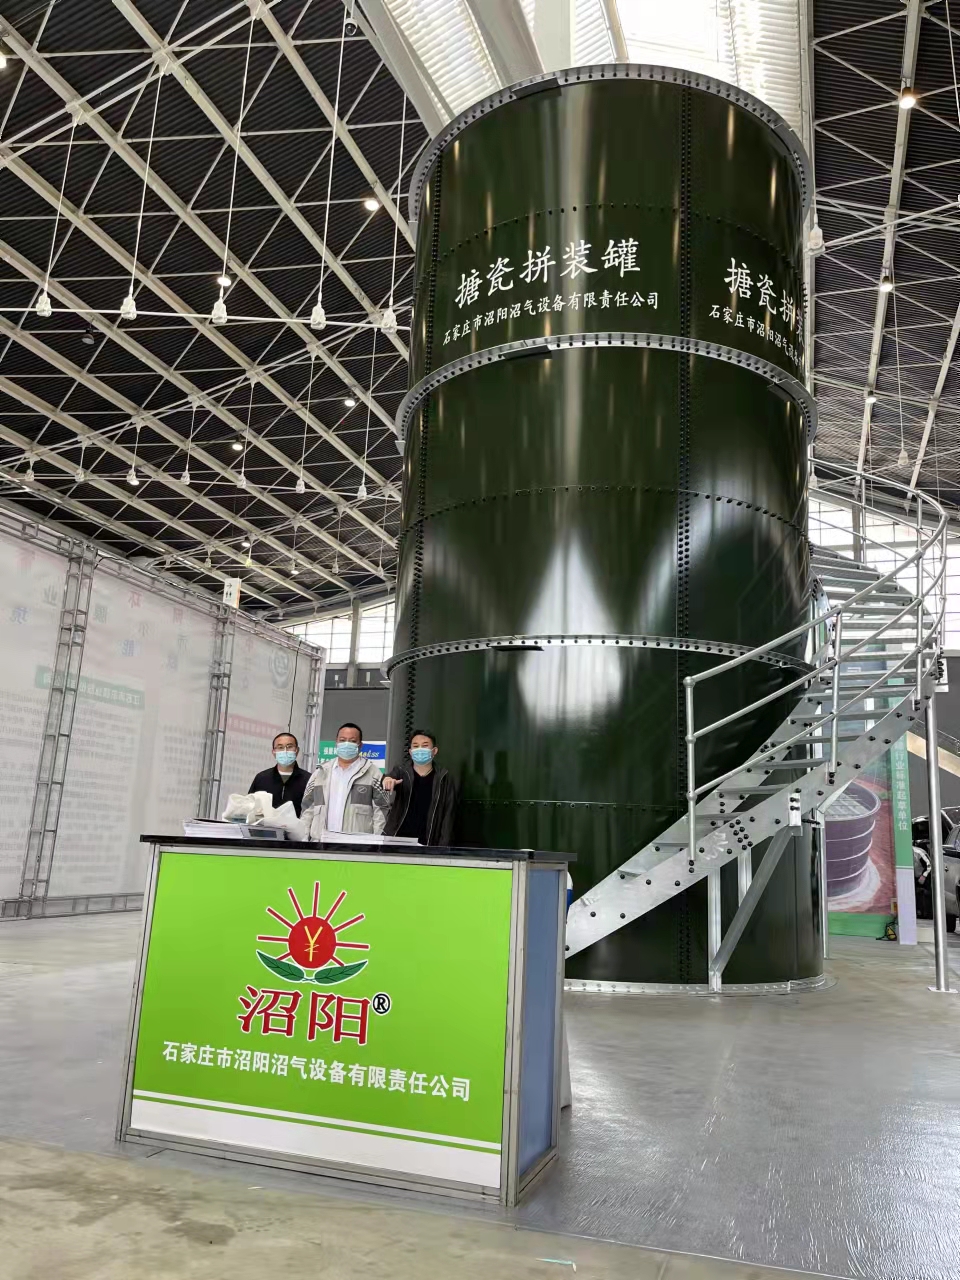 sample tank in Shijiazhuang environmental fair   contact Jane   mob 15373670441 jane@bsltank.com